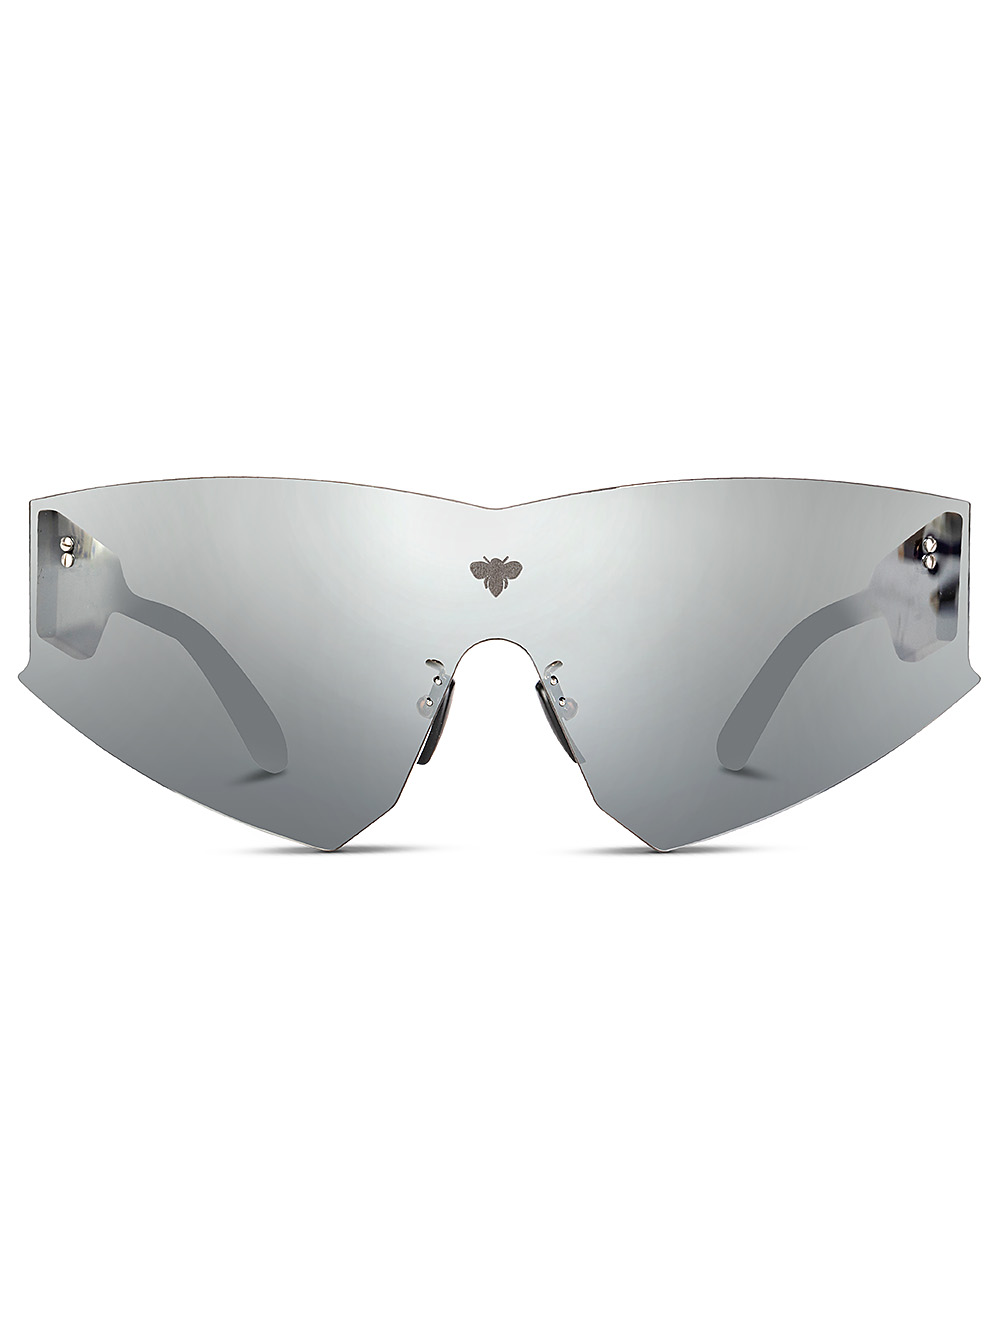 Vertigo Glasses in Acetate with a Futuristic Shape